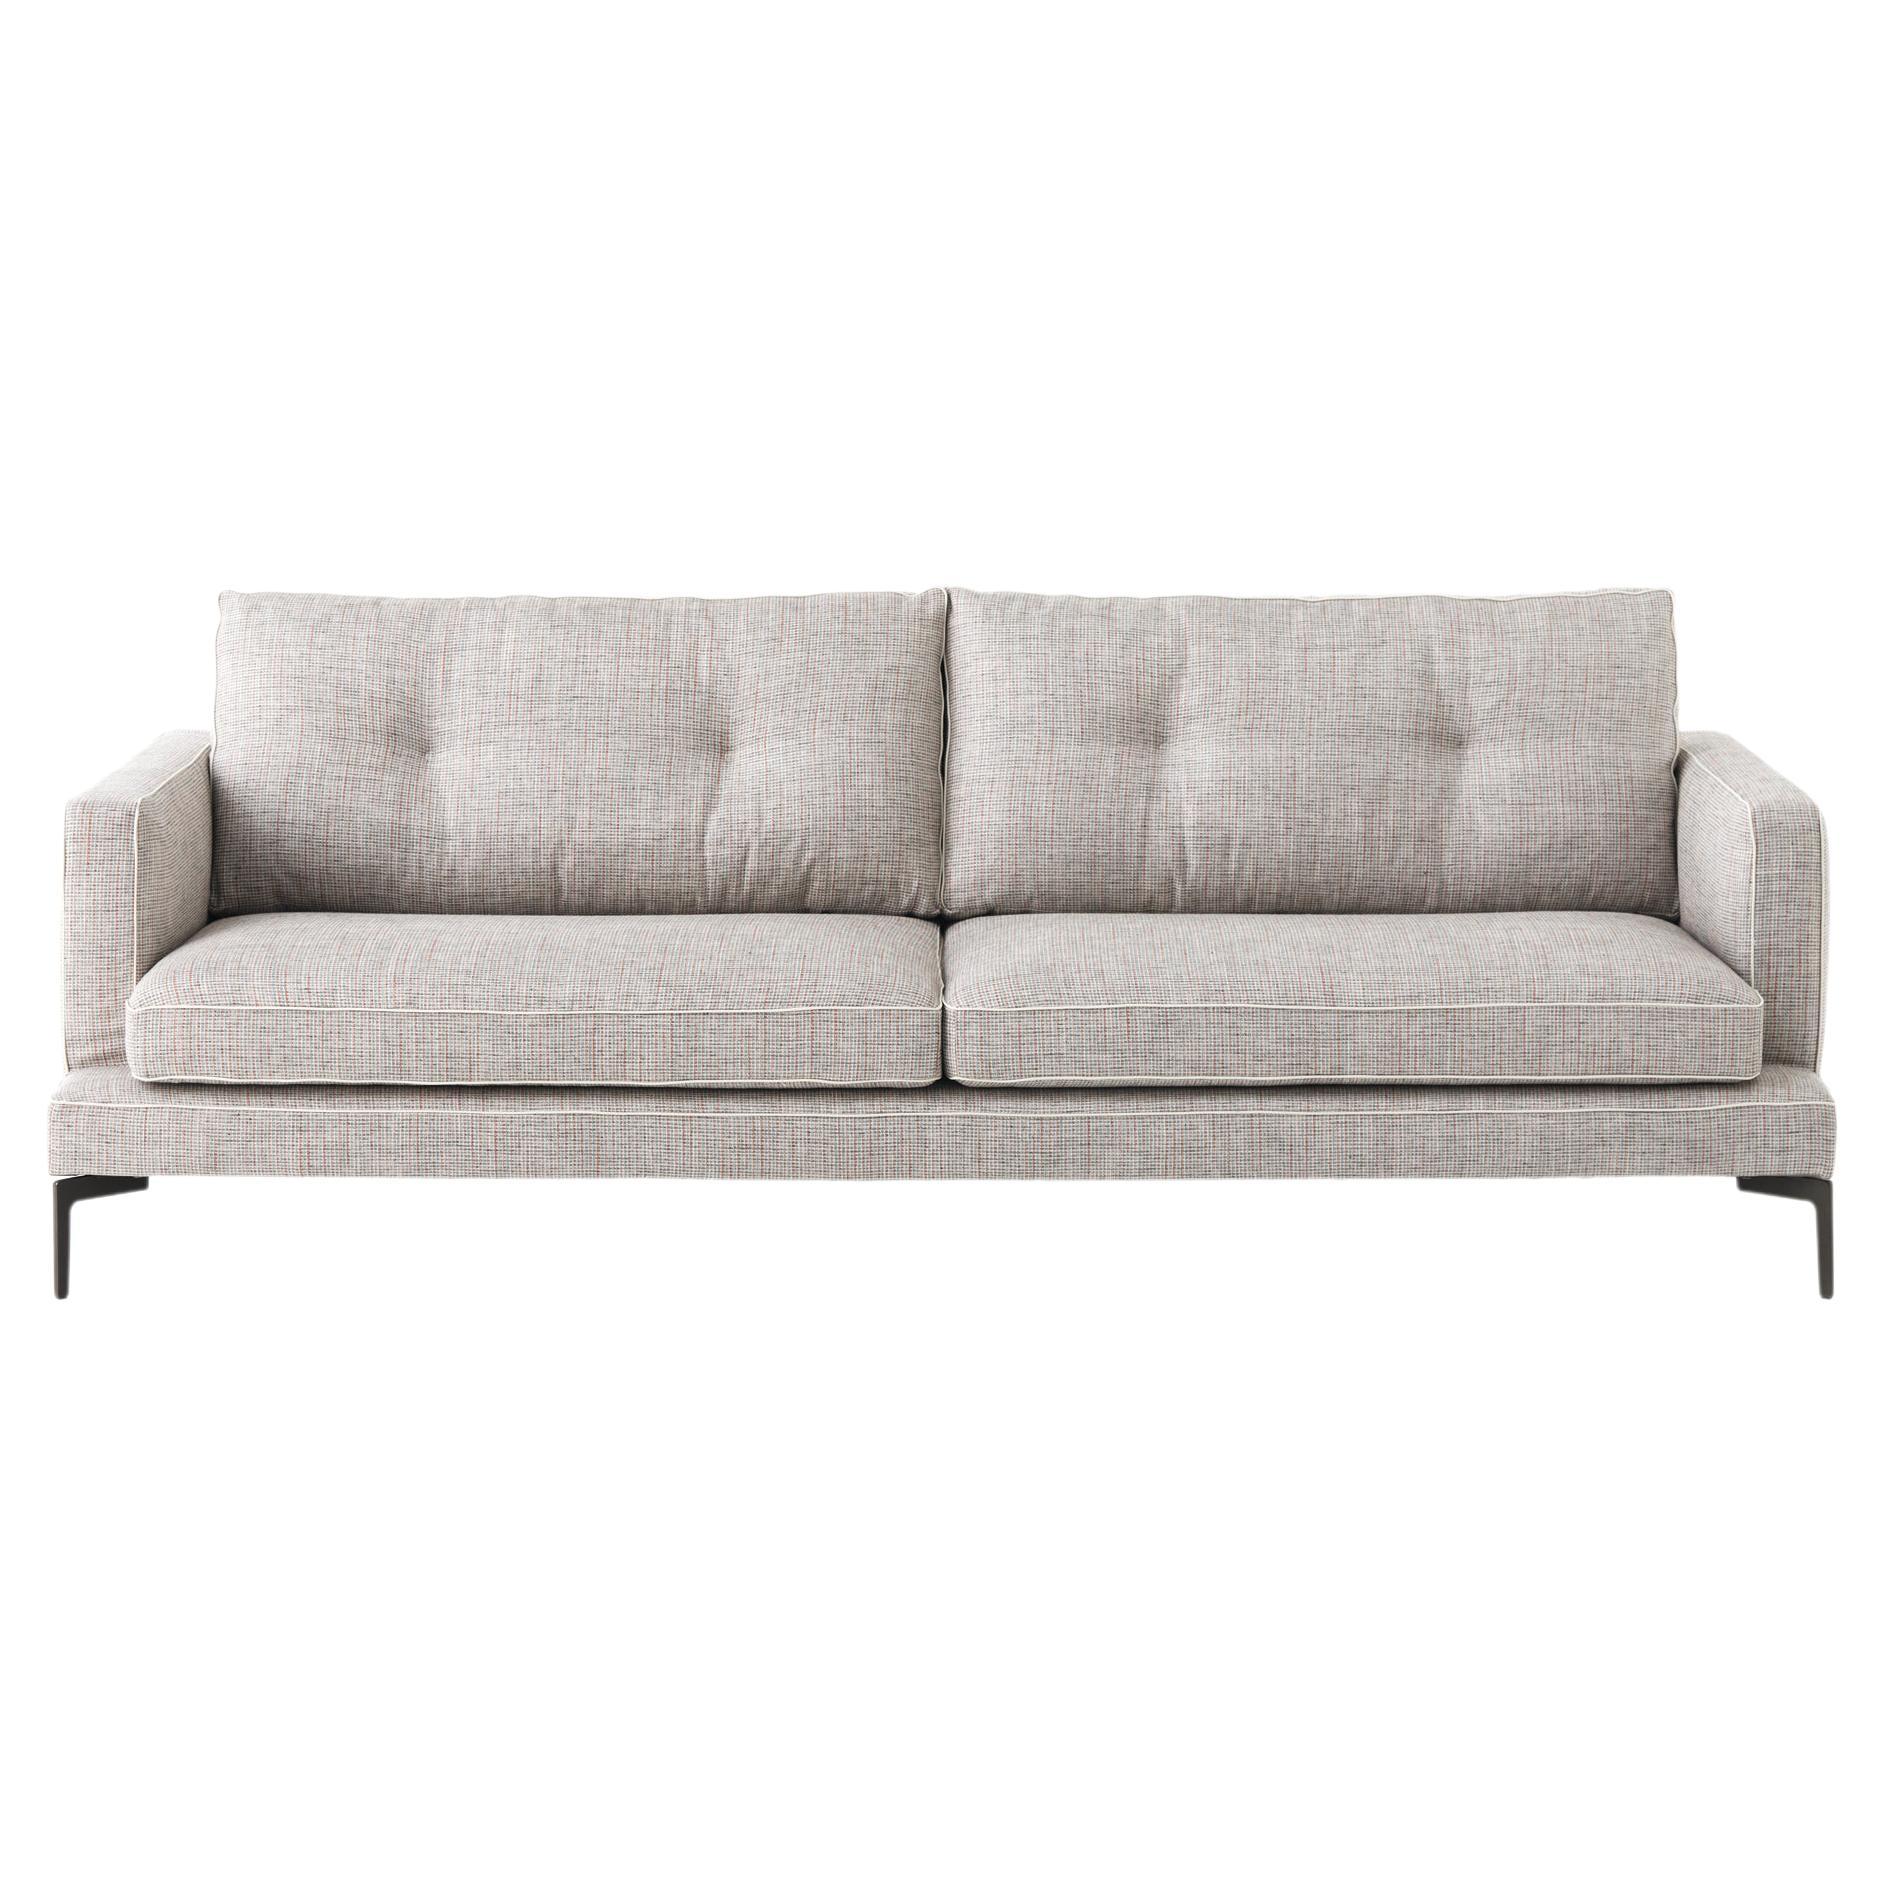 Essentiel 2-Seat 220 Sofa in Vip Beige Upholstery & Grey Legs by Sergio Bicego